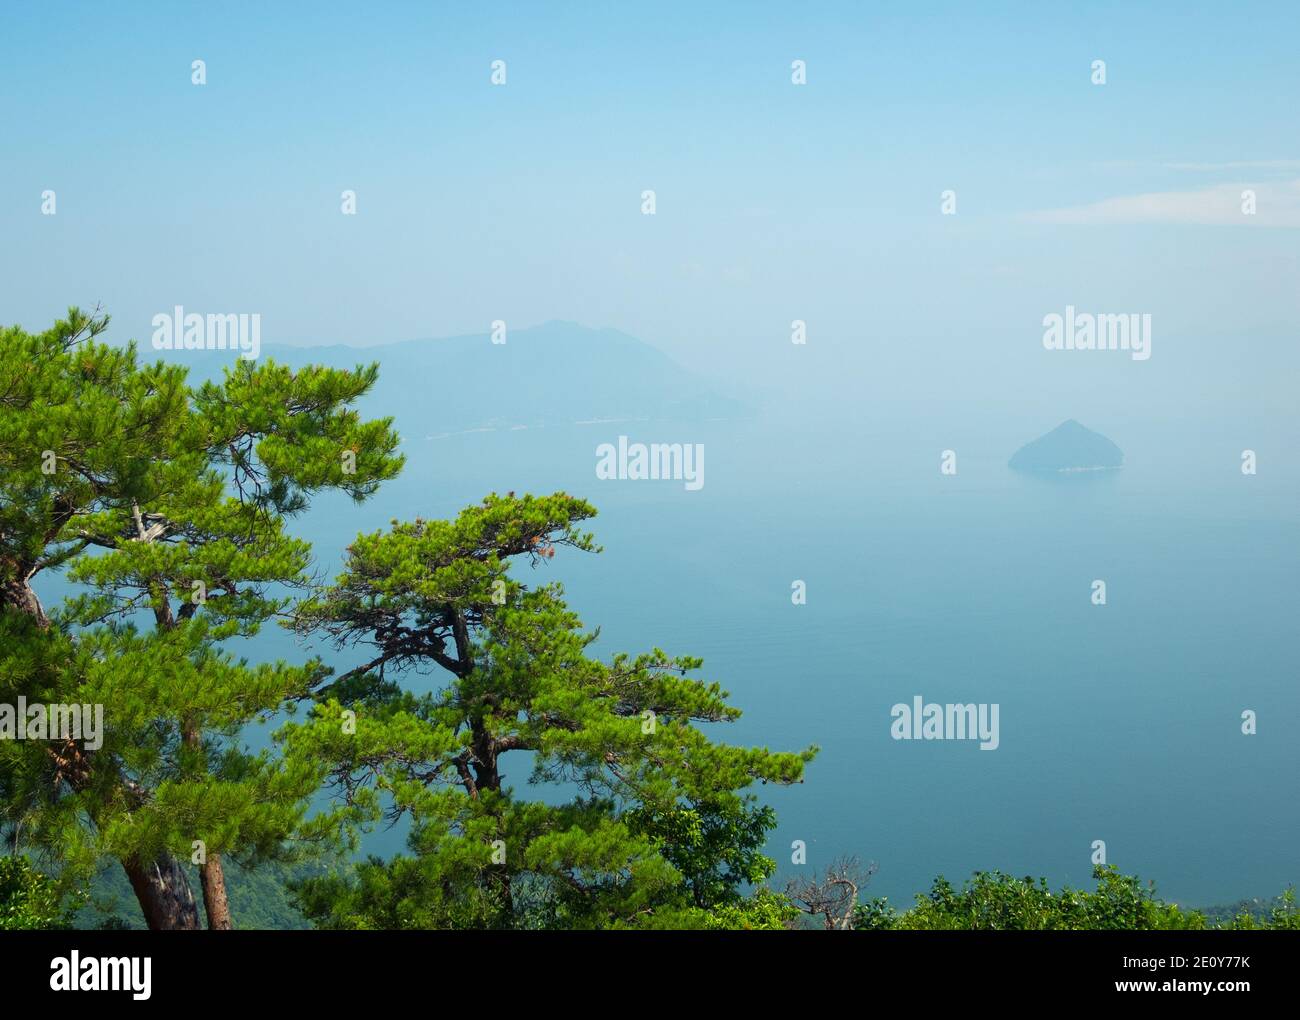 A view of Seto Inland Sea on a hazy summer day from the Shishiiwa Observatory on Mount Misen, Miyajima Island (Itsukushima), Japan. Stock Photo